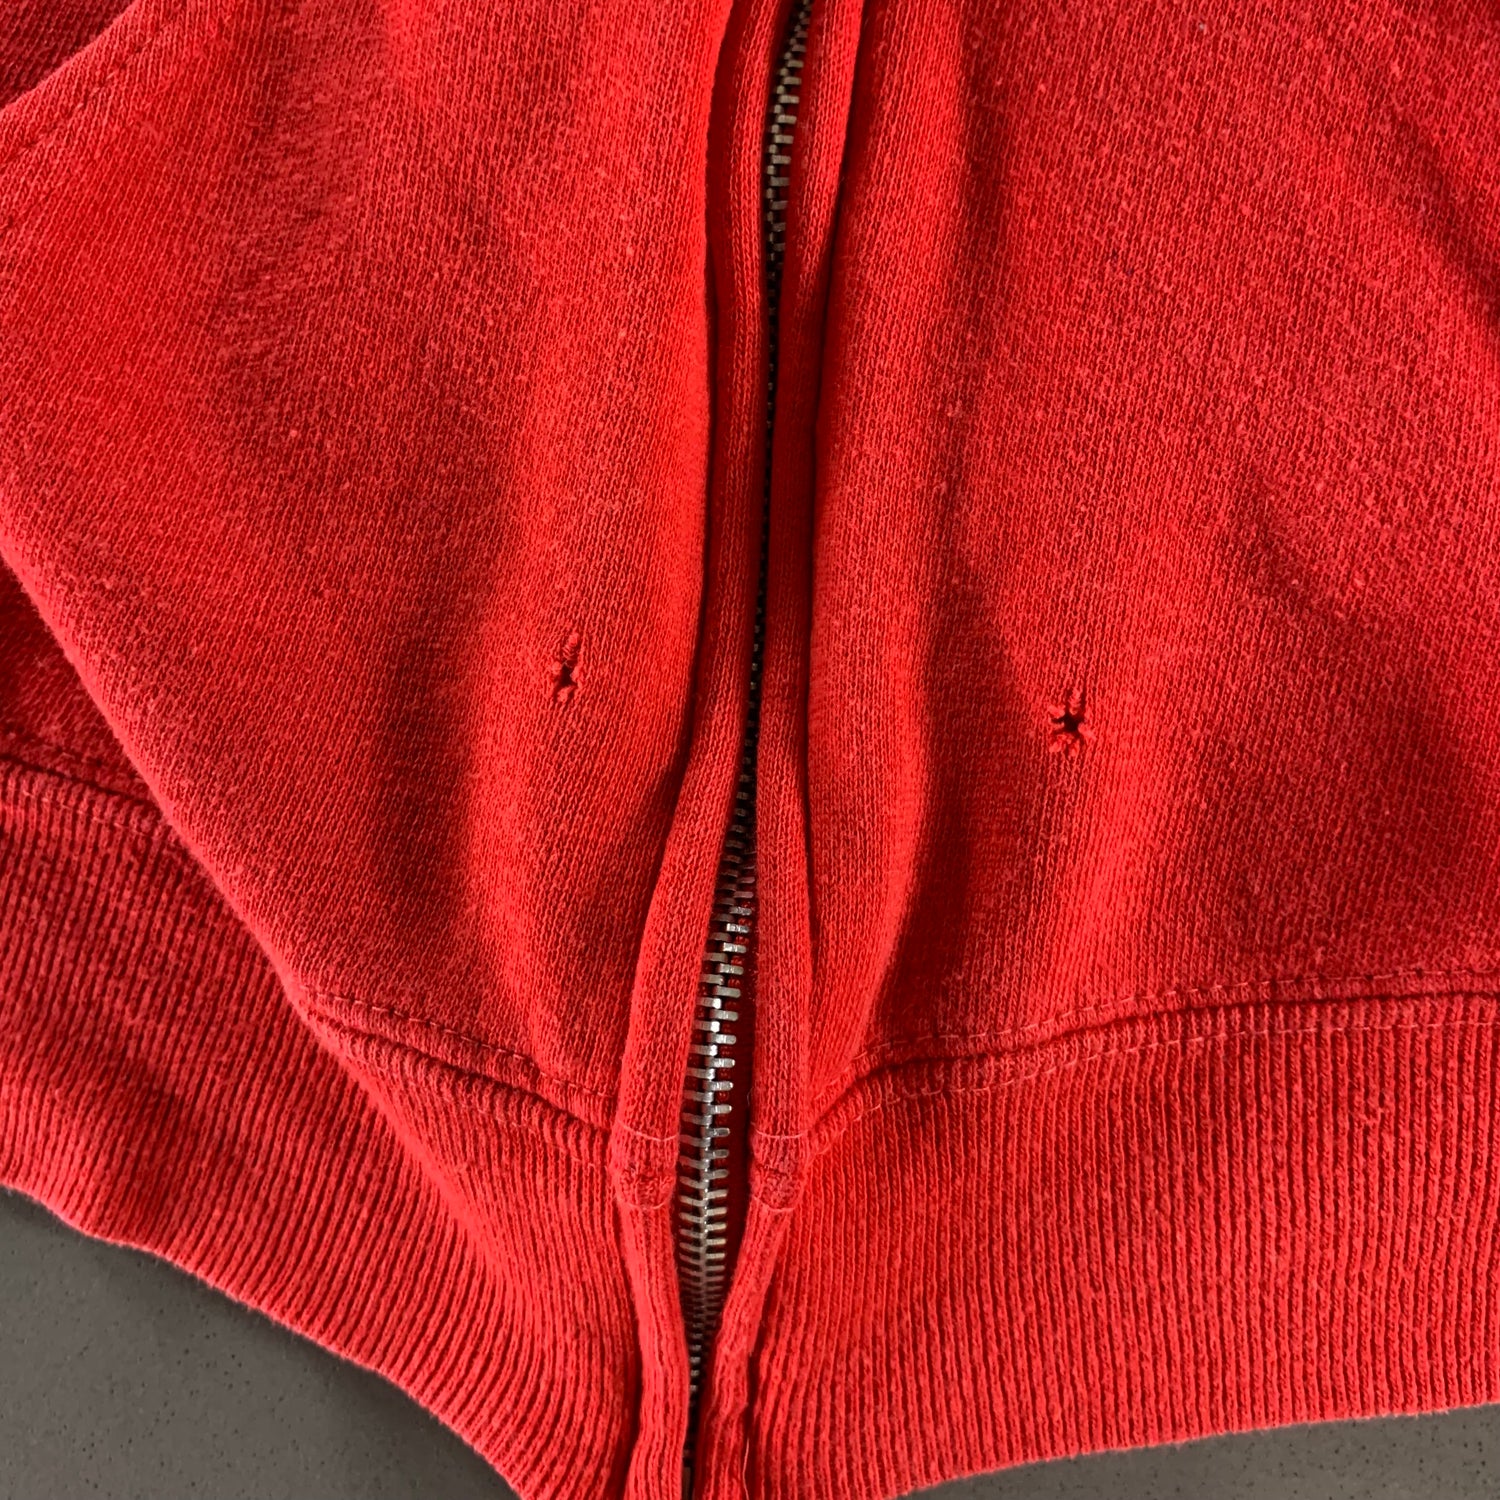 Vintage 1980s Zip Up Hooded Sweatshirt size Large